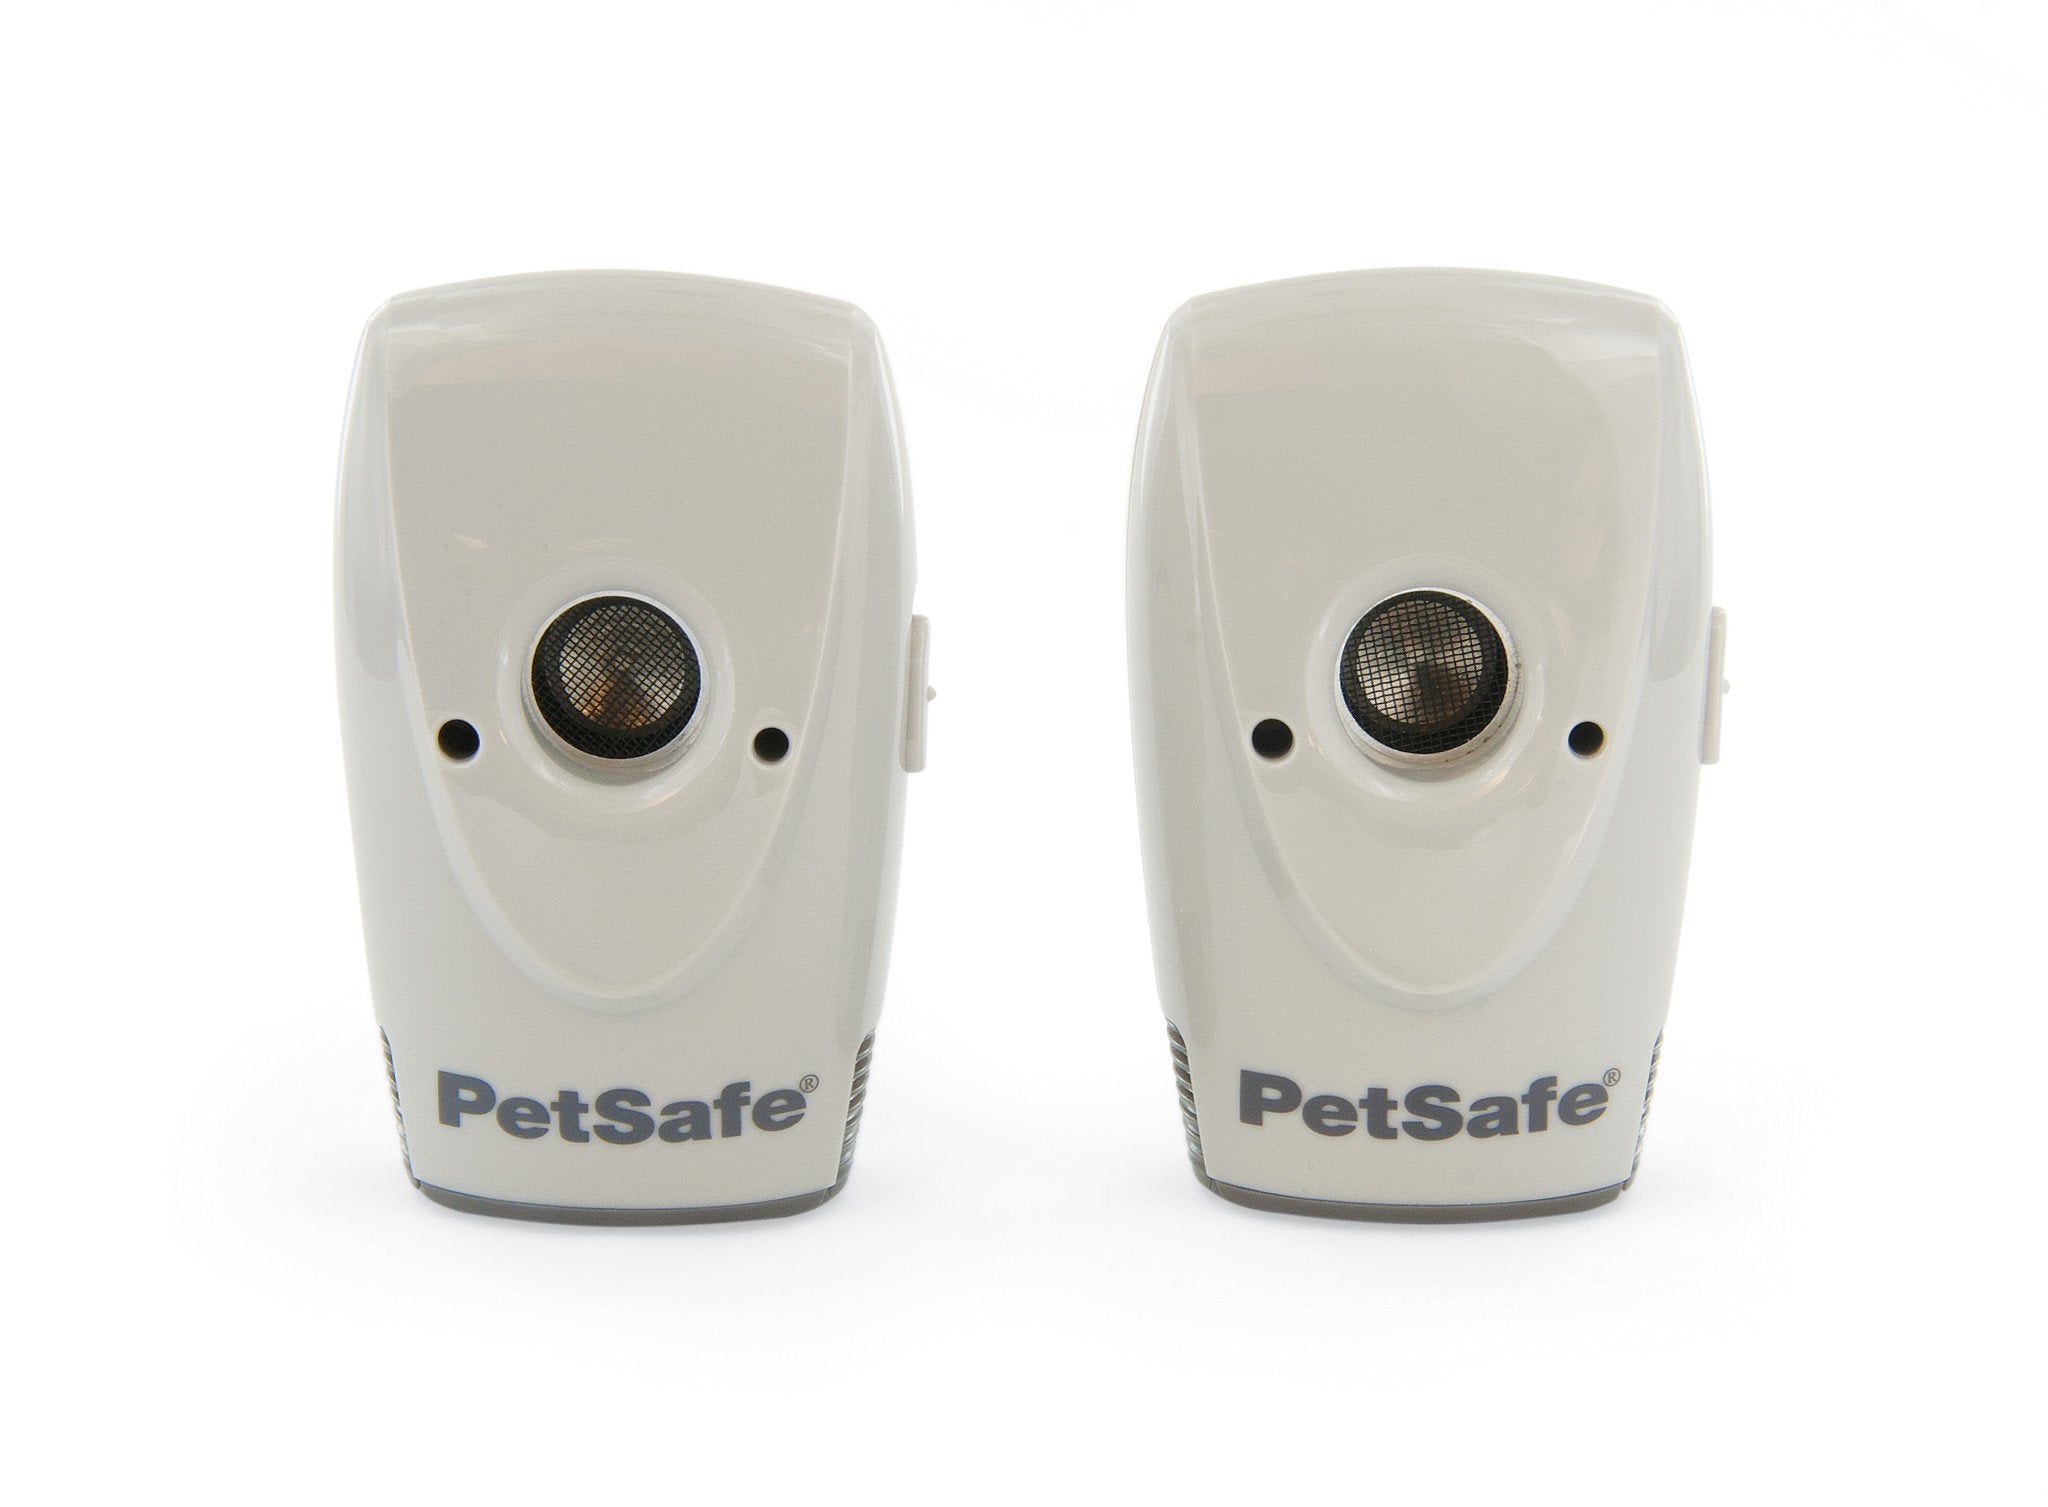 PetSafe® Indoor Bark Control, 2-Pack